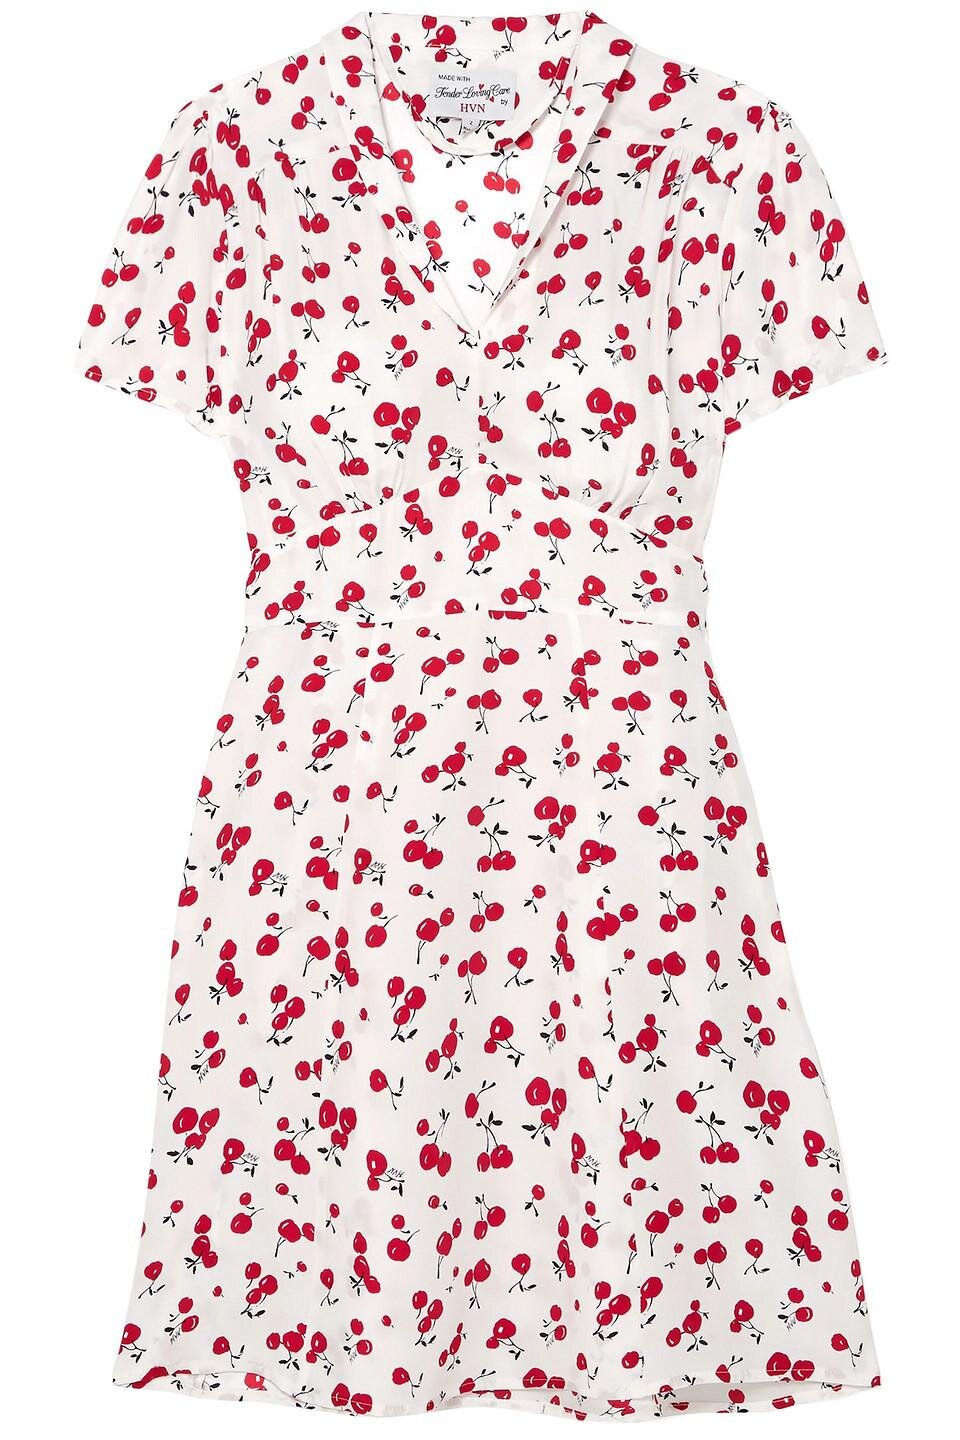 HVN Morgan Mini Dress in Cherry Print.jpg